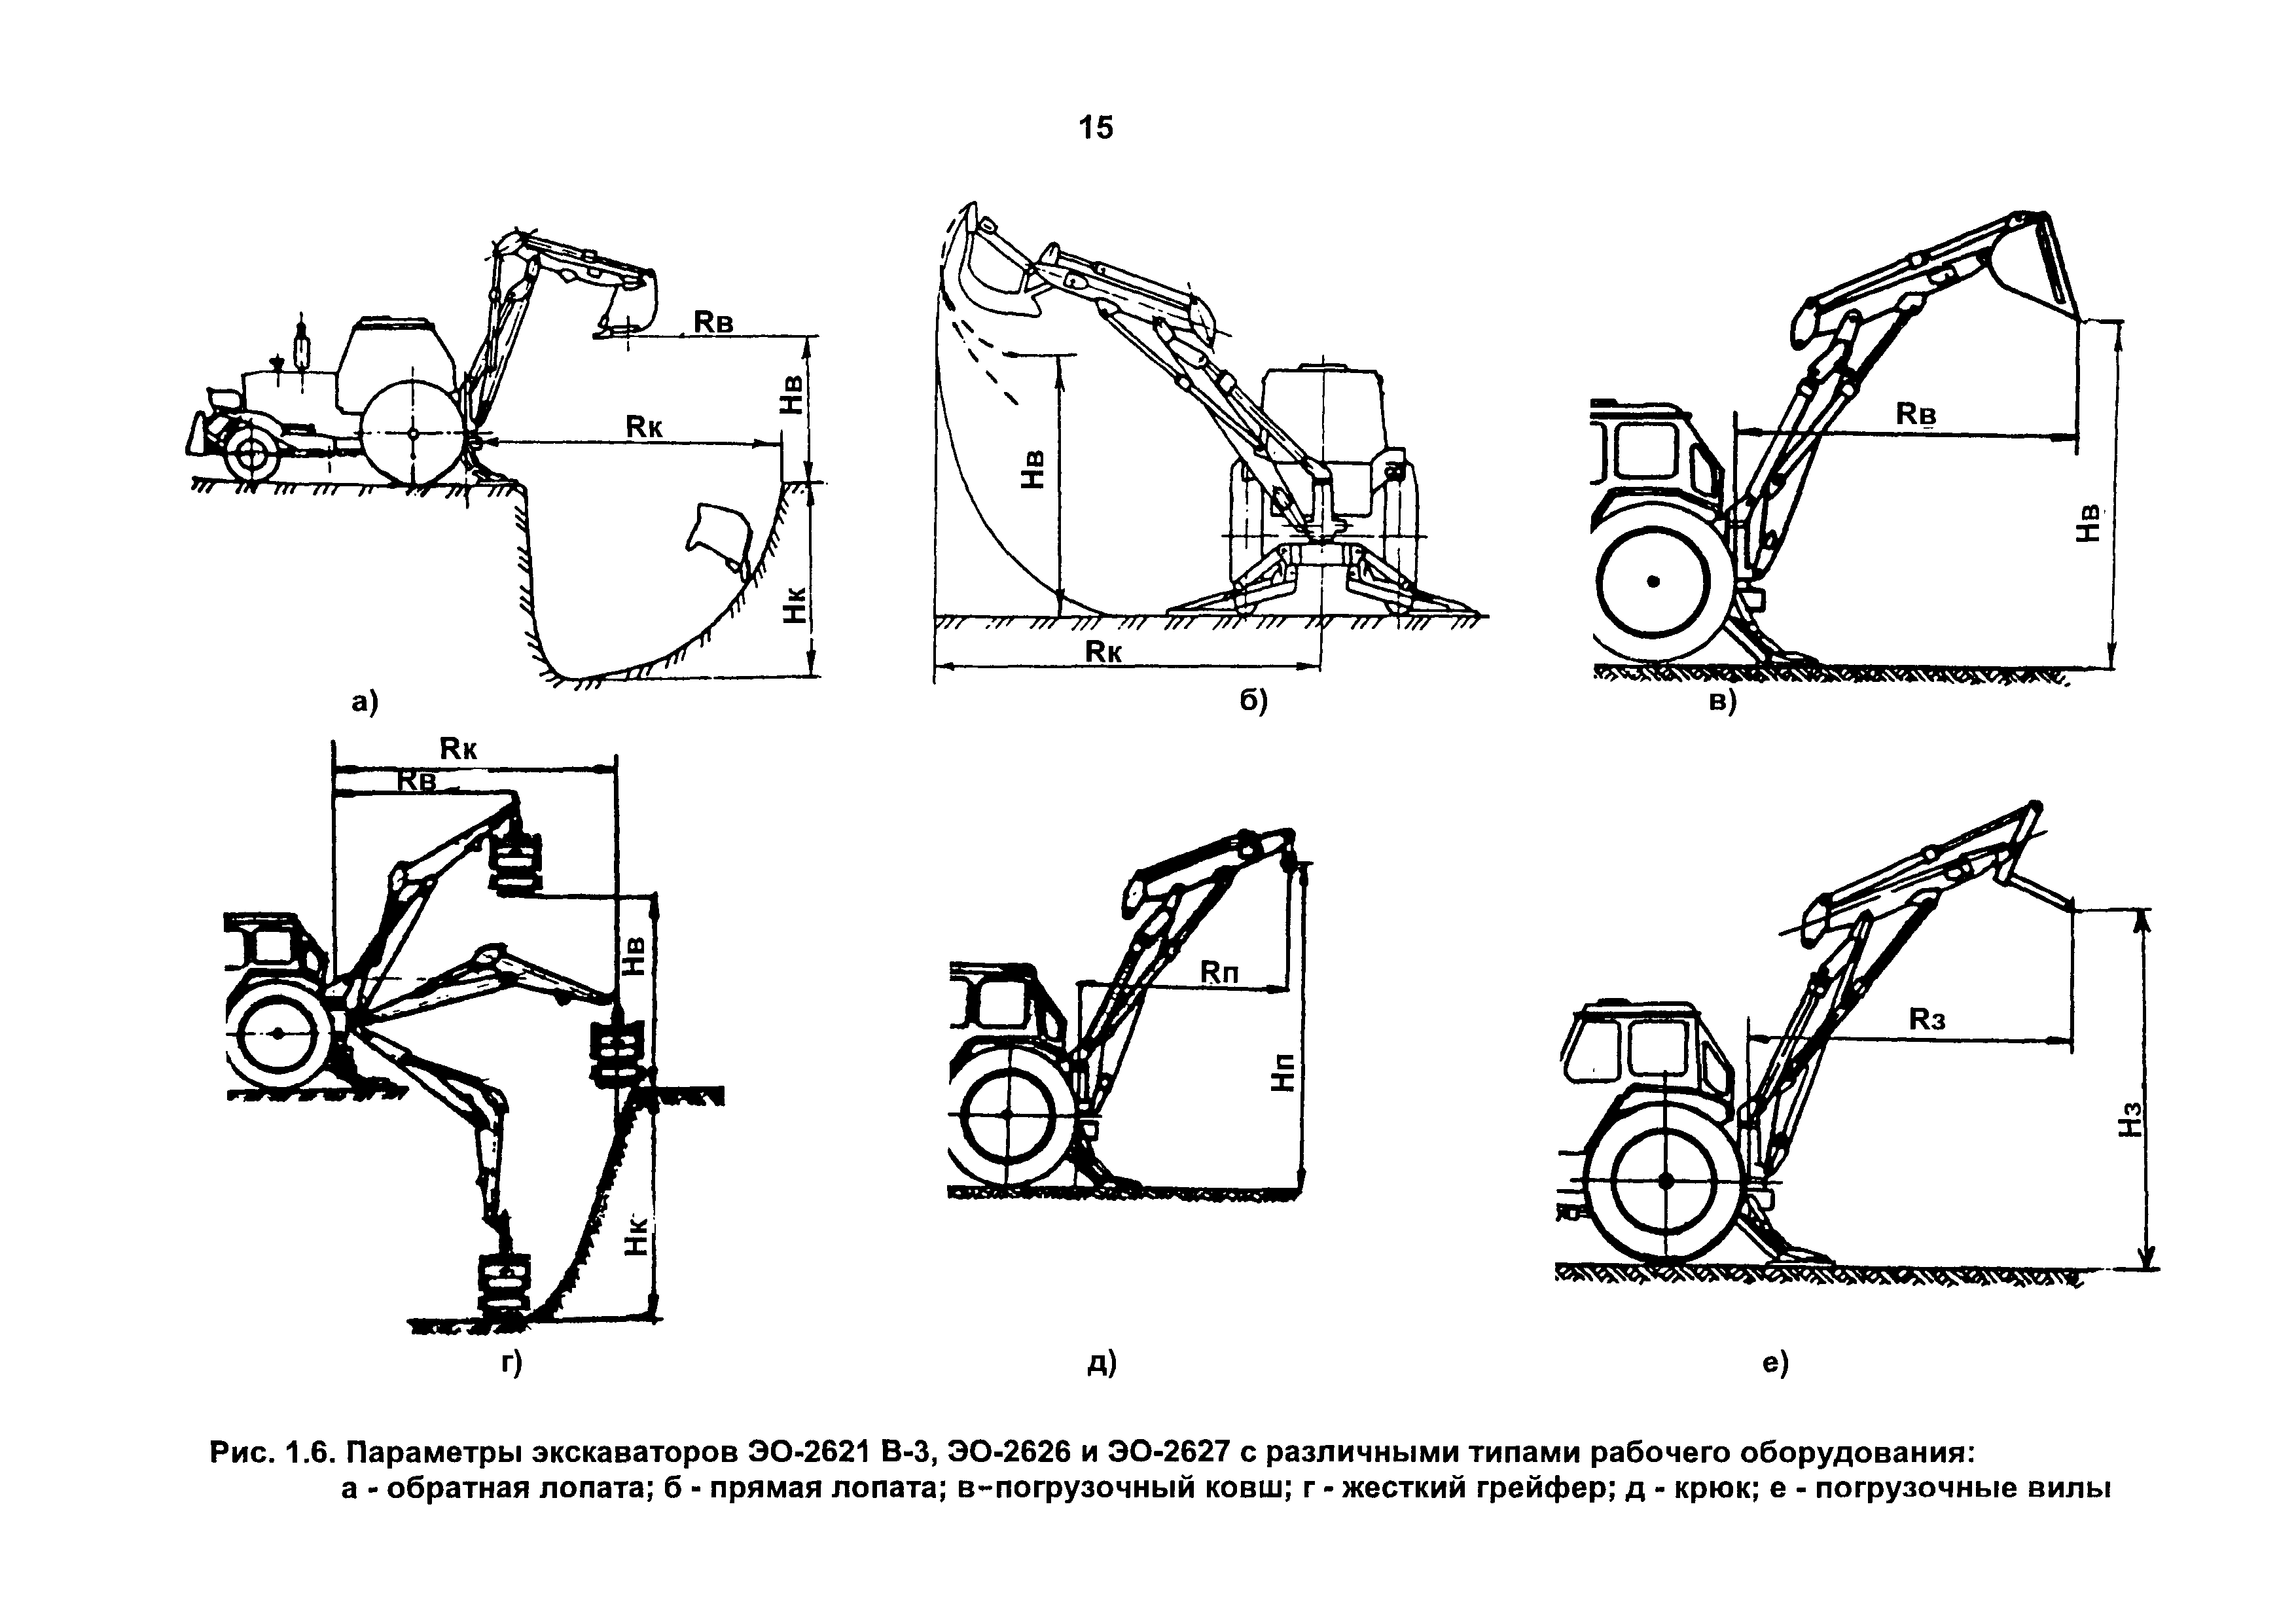 Эо-2621: технические характеристики экскаватора юмз, вес трактора петушок и погрузчика